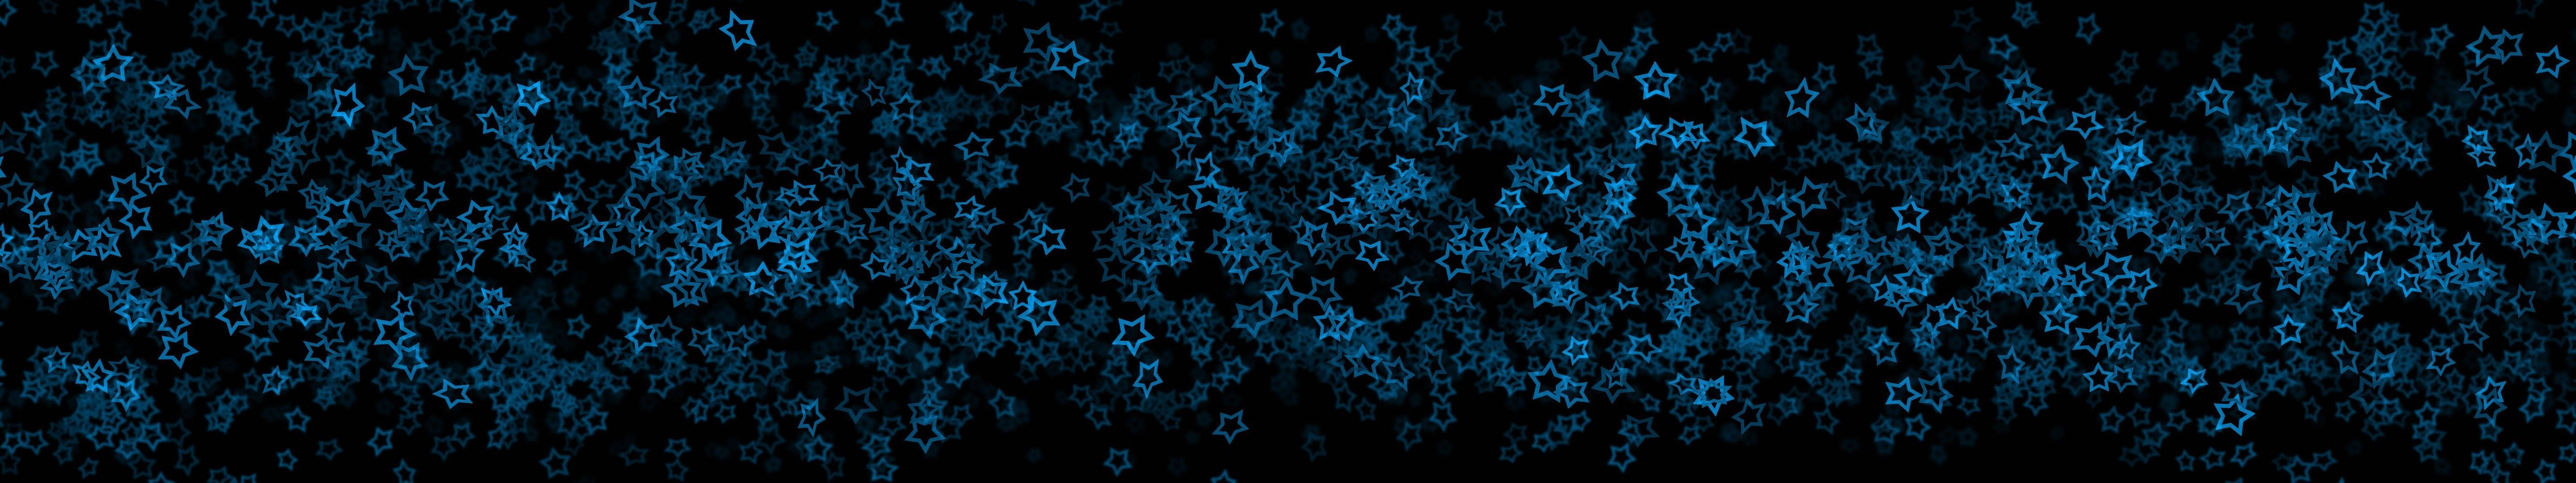 Dark Abstract Blue Star Confetti